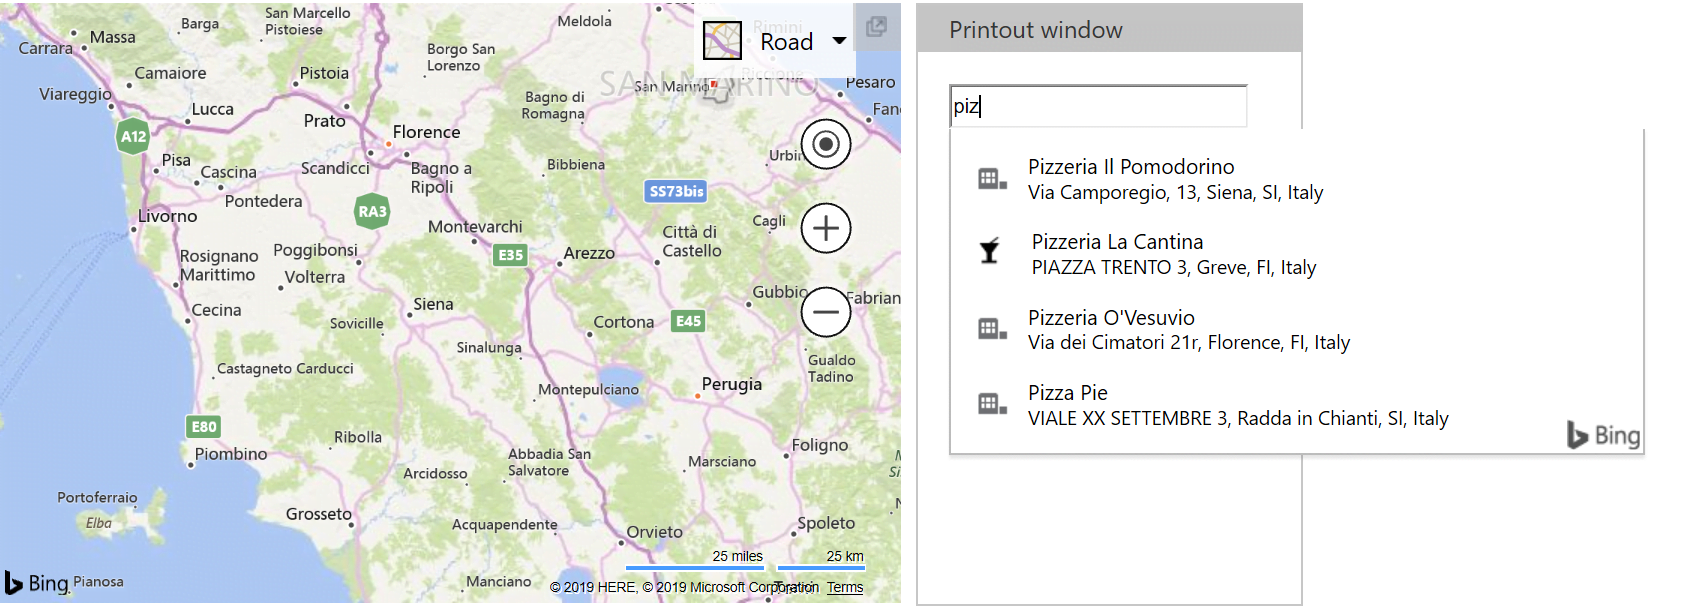 Bing Maps Autosuggest - Italy